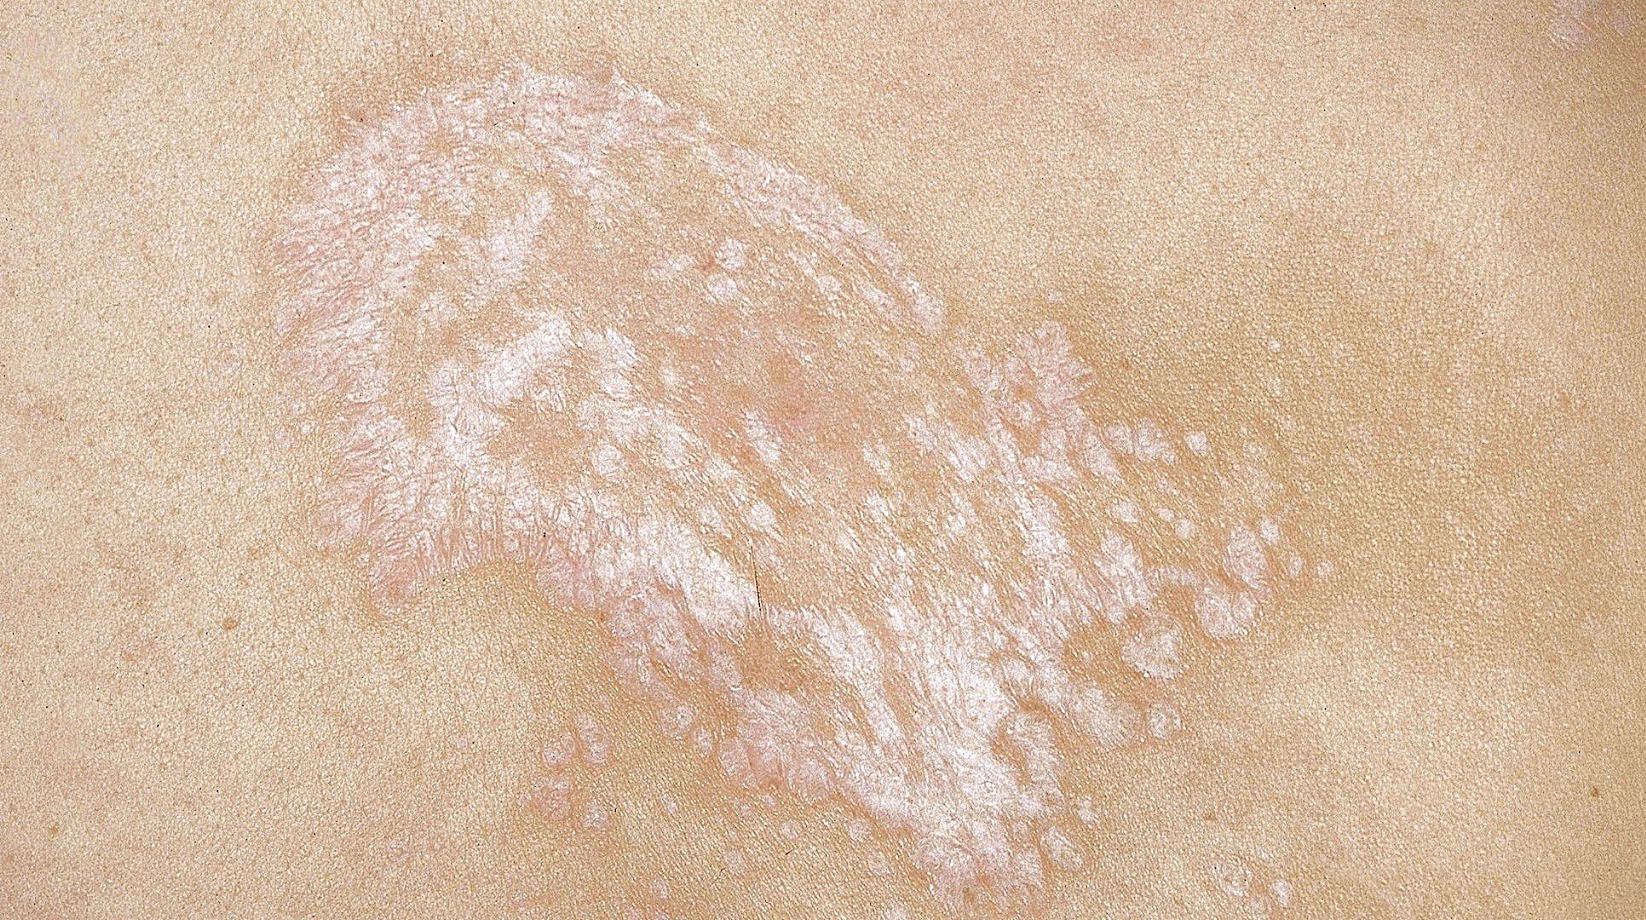 Lichen sclerosus